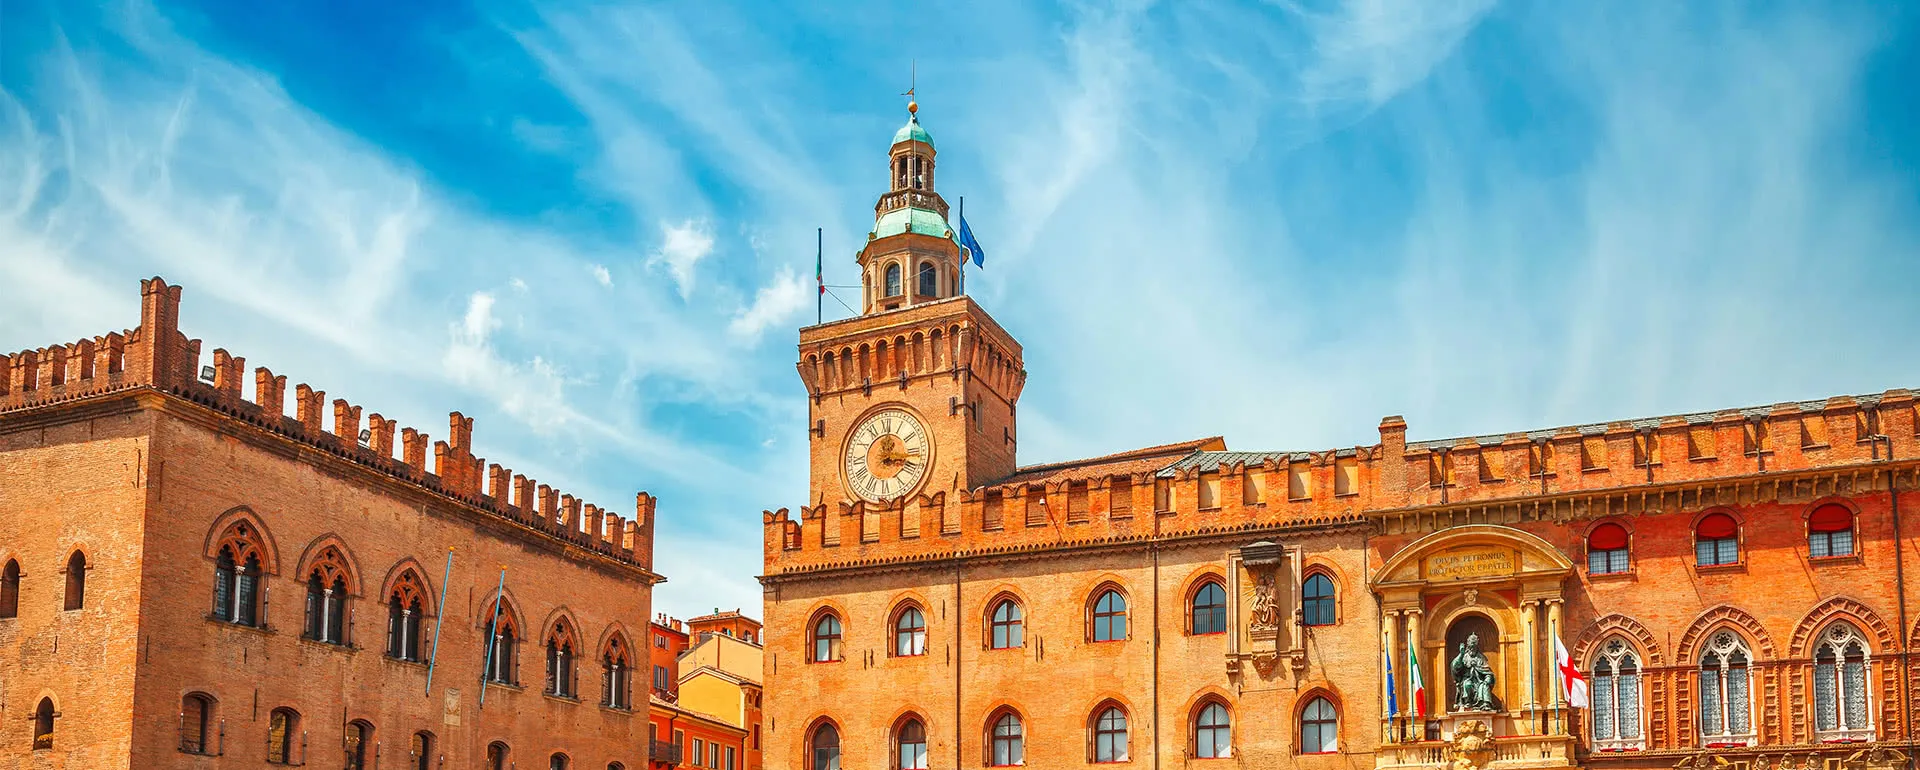 Bologna - the destination for school trips